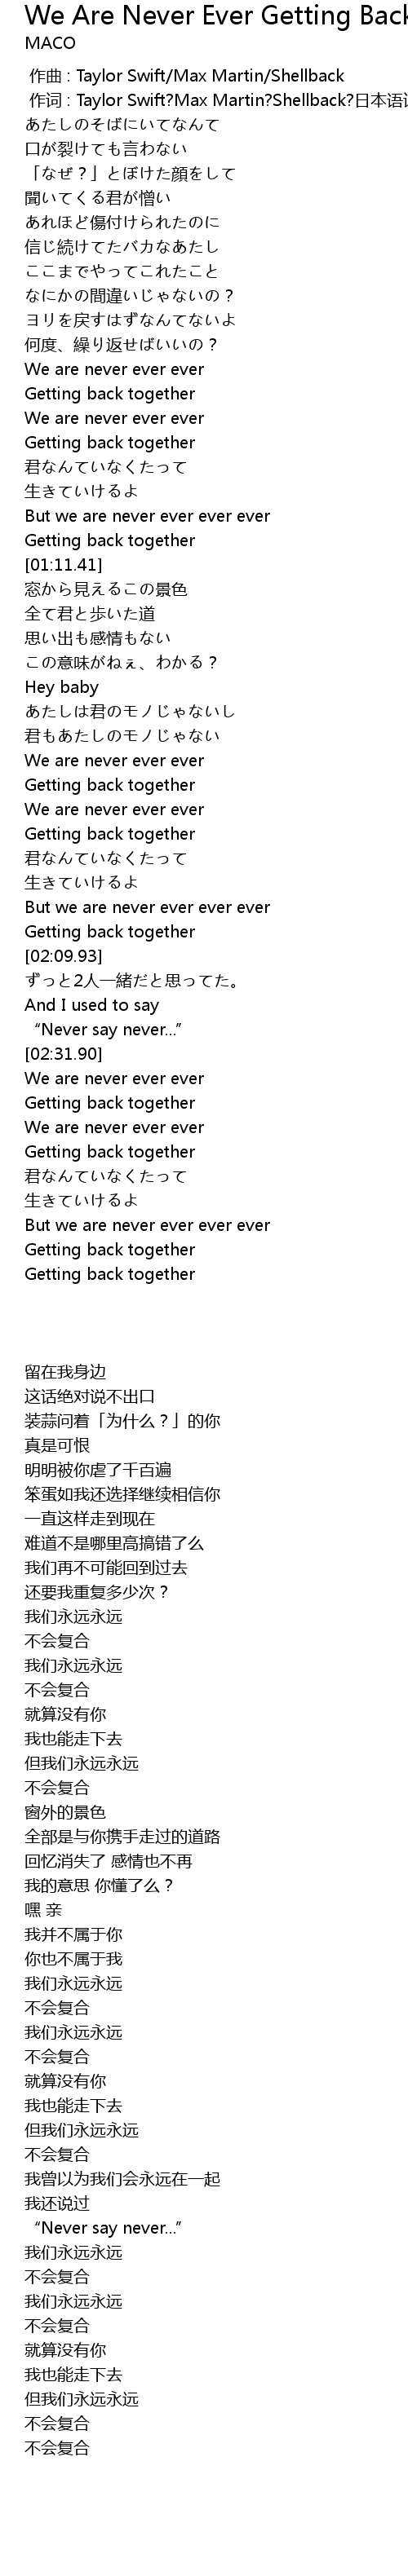 We Are Never Ever Getting Back Together Japanese Ver Lyrics Follow Lyrics